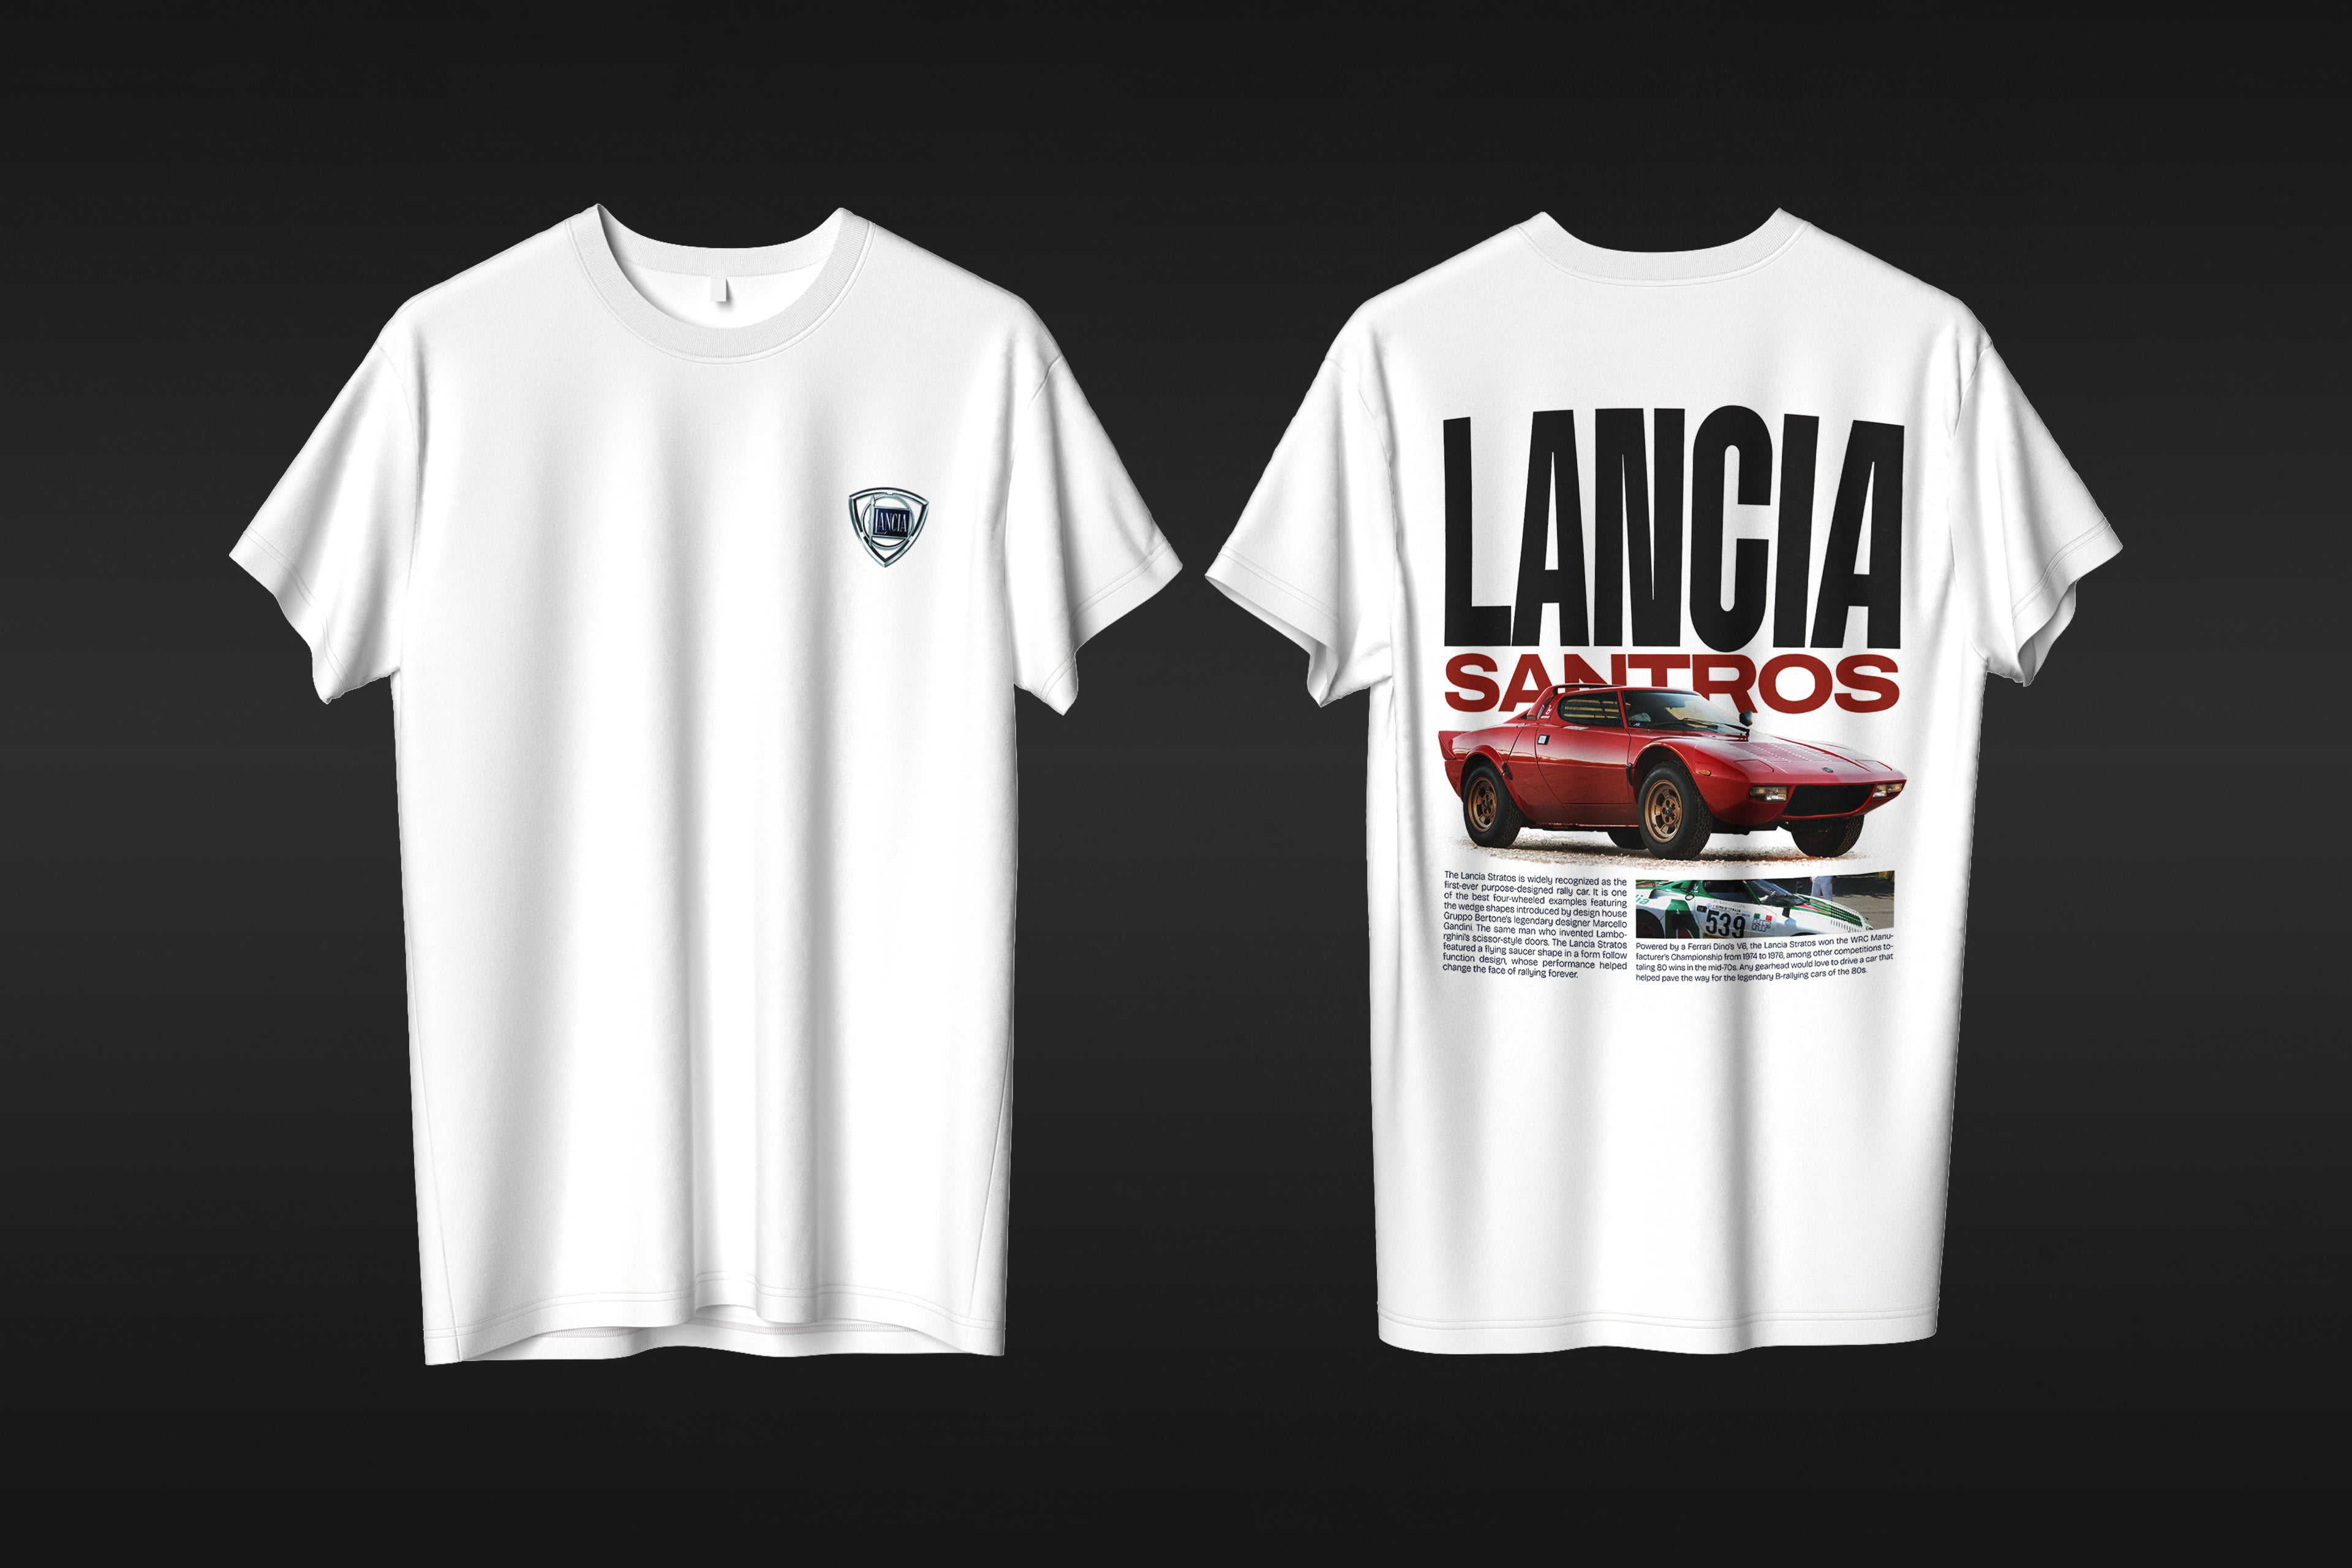 Lancia Santros - T-shirt